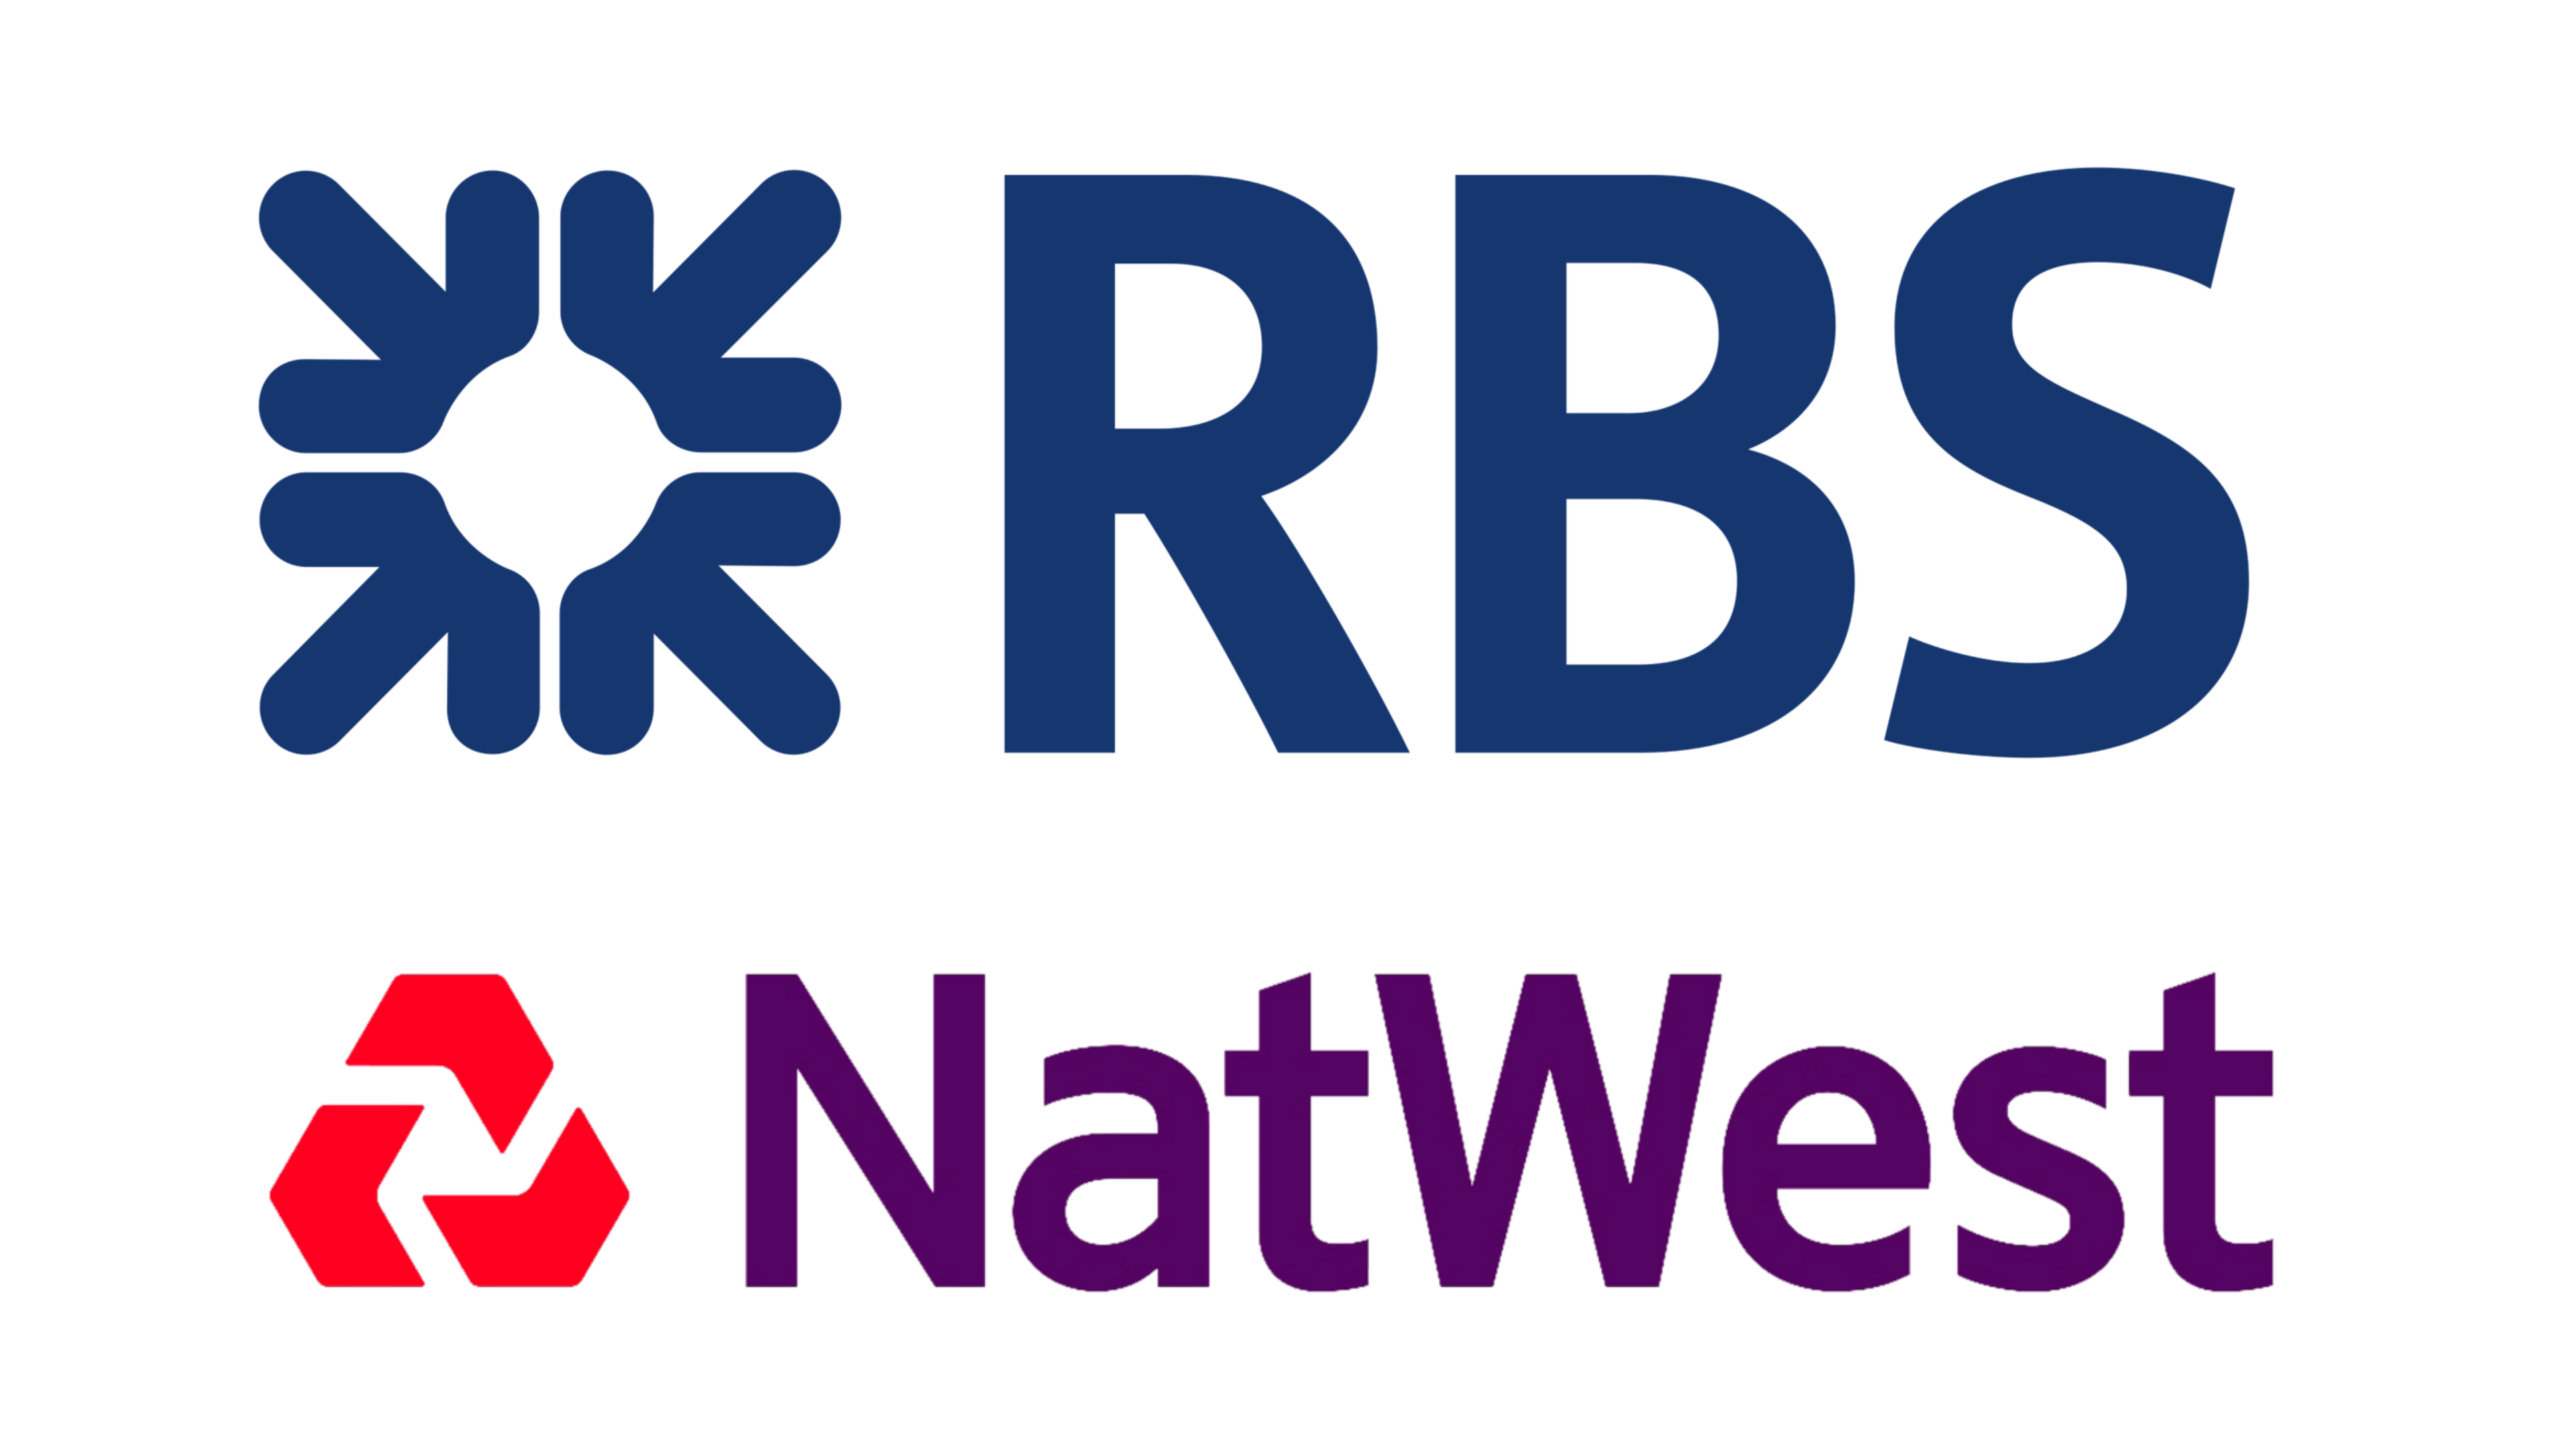 rbs-natwest-logo